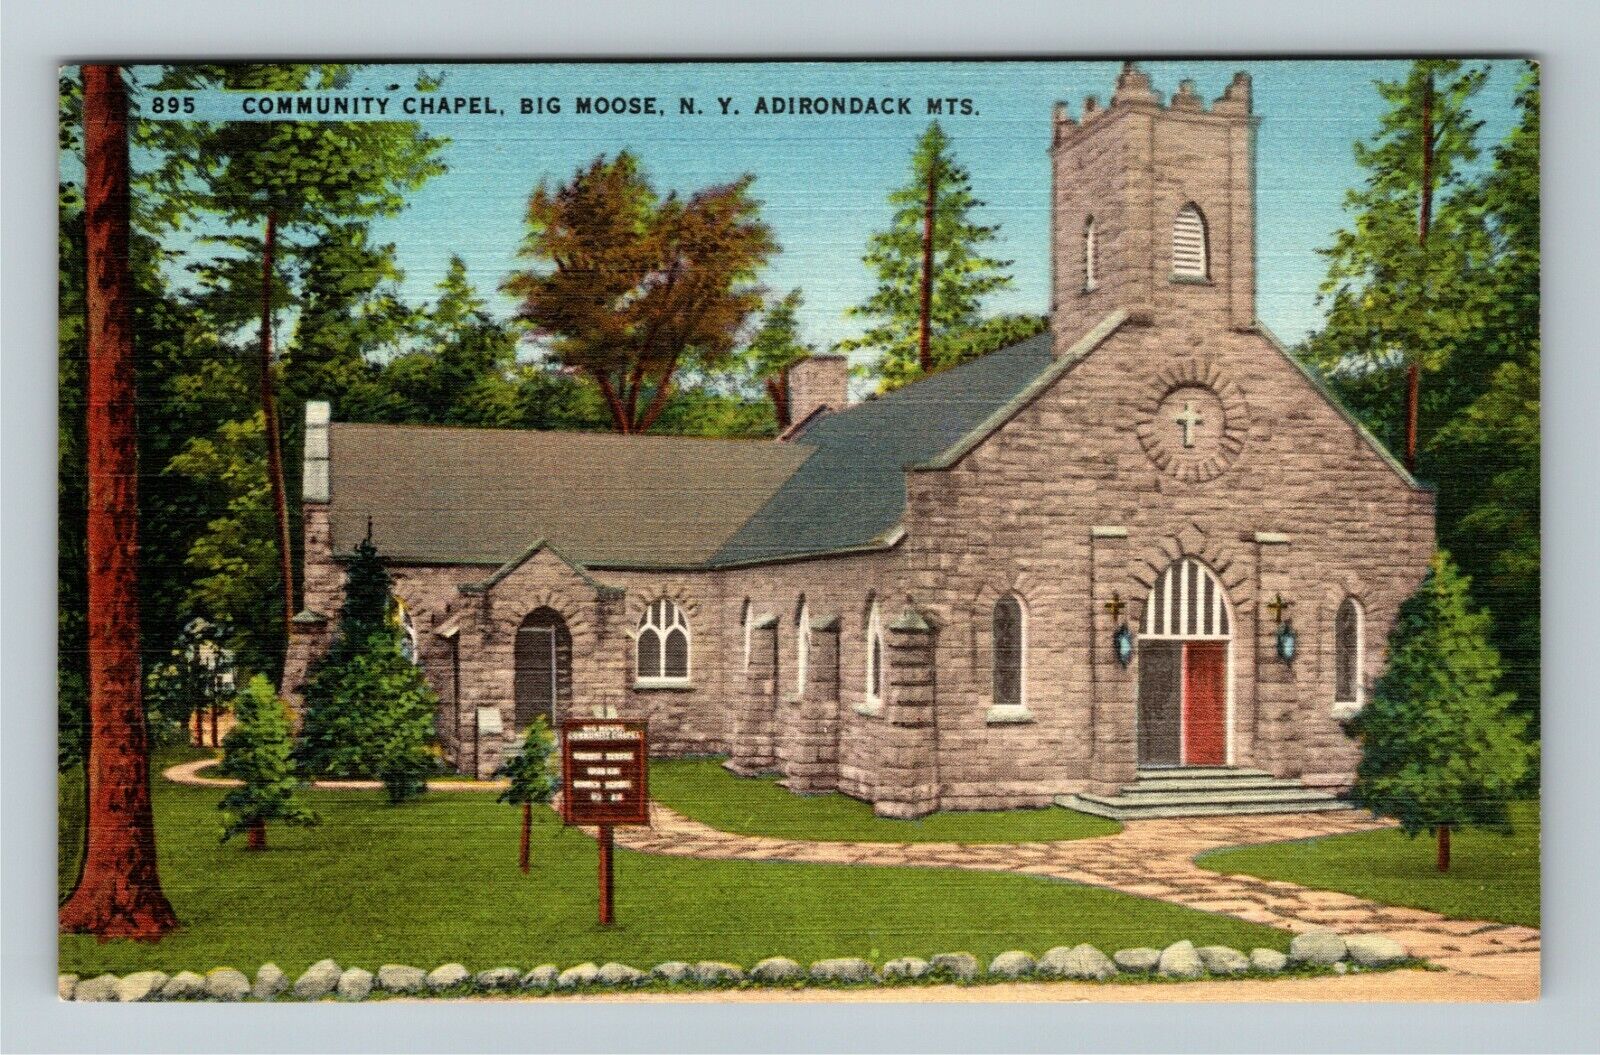 Big Moose, NY-New York, Community Chapel Adirondack Mts., Vintage Postcard